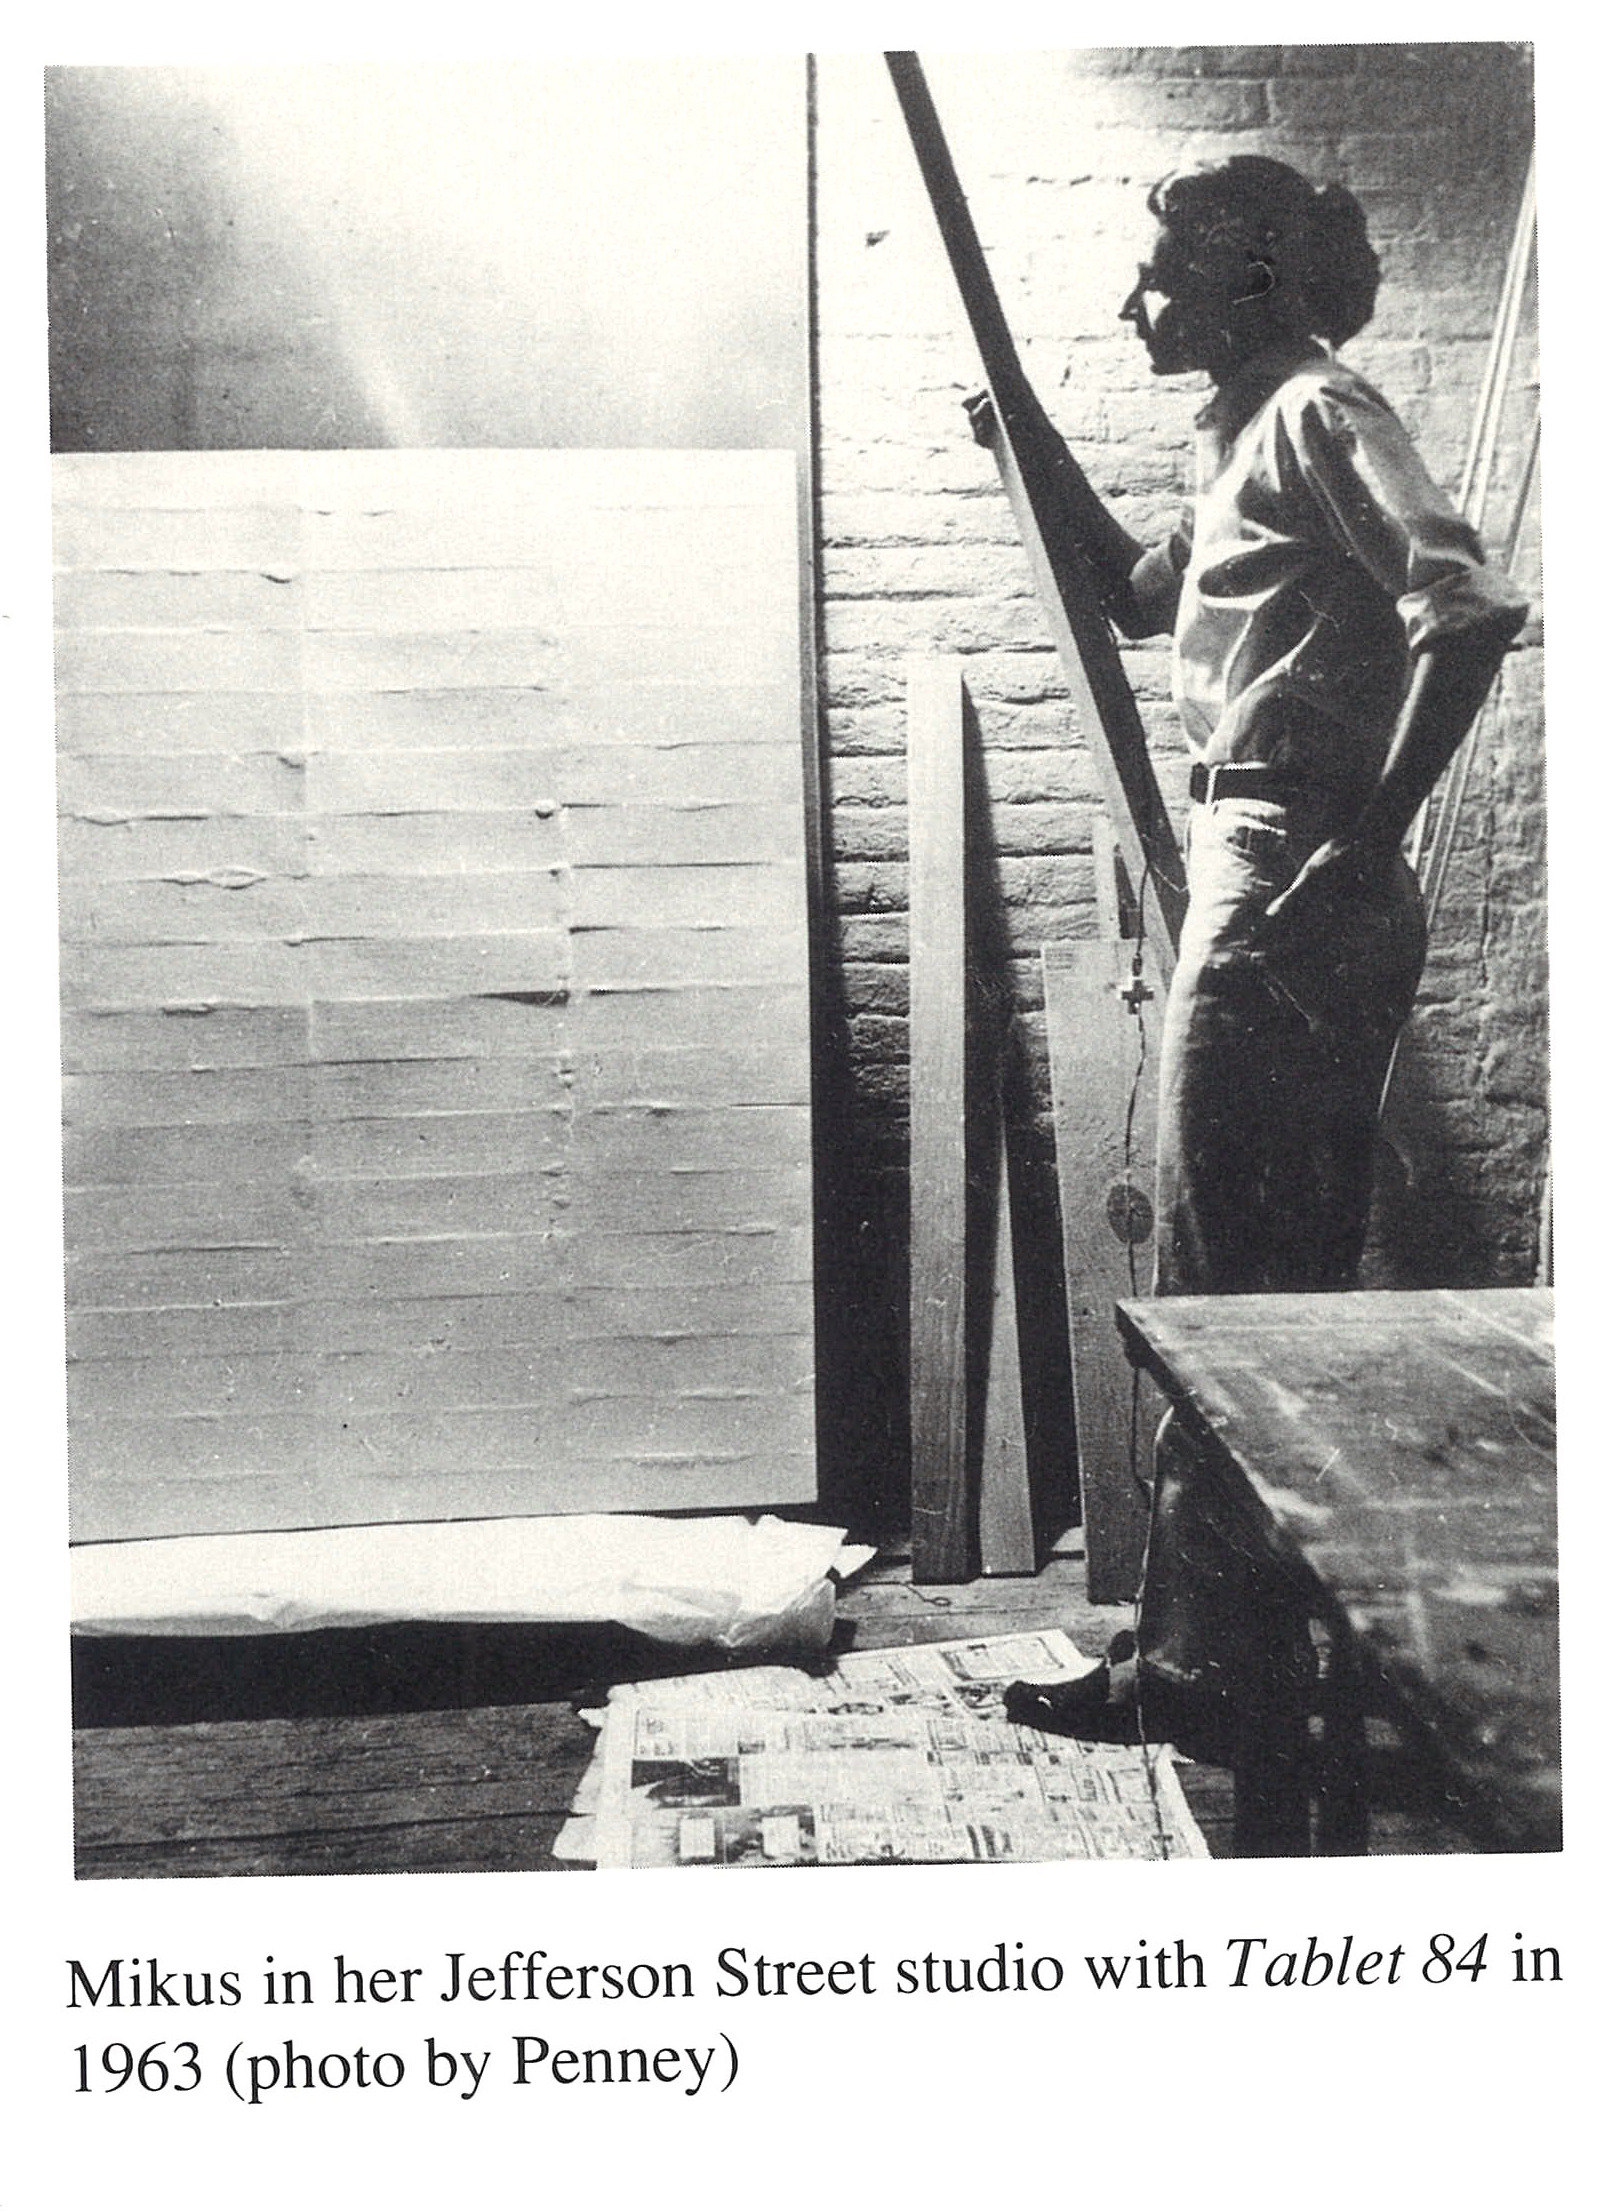 Archival image of Eleanor Mikus in her Jefferson Street studio with her work Tablet 84